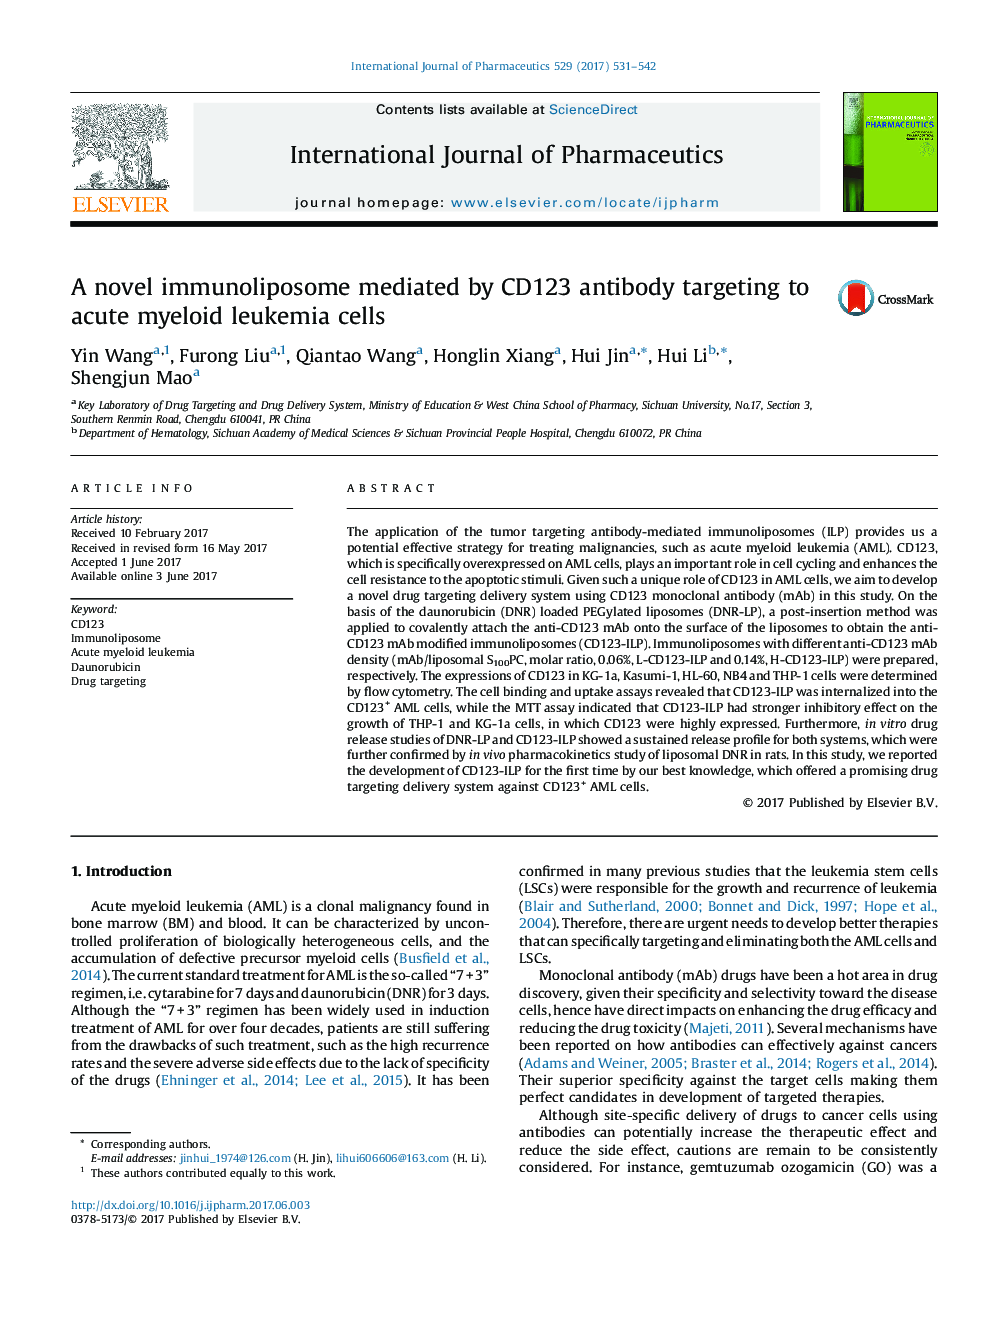 A novel immunoliposome mediated by CD123 antibody targeting to acute myeloid leukemia cells